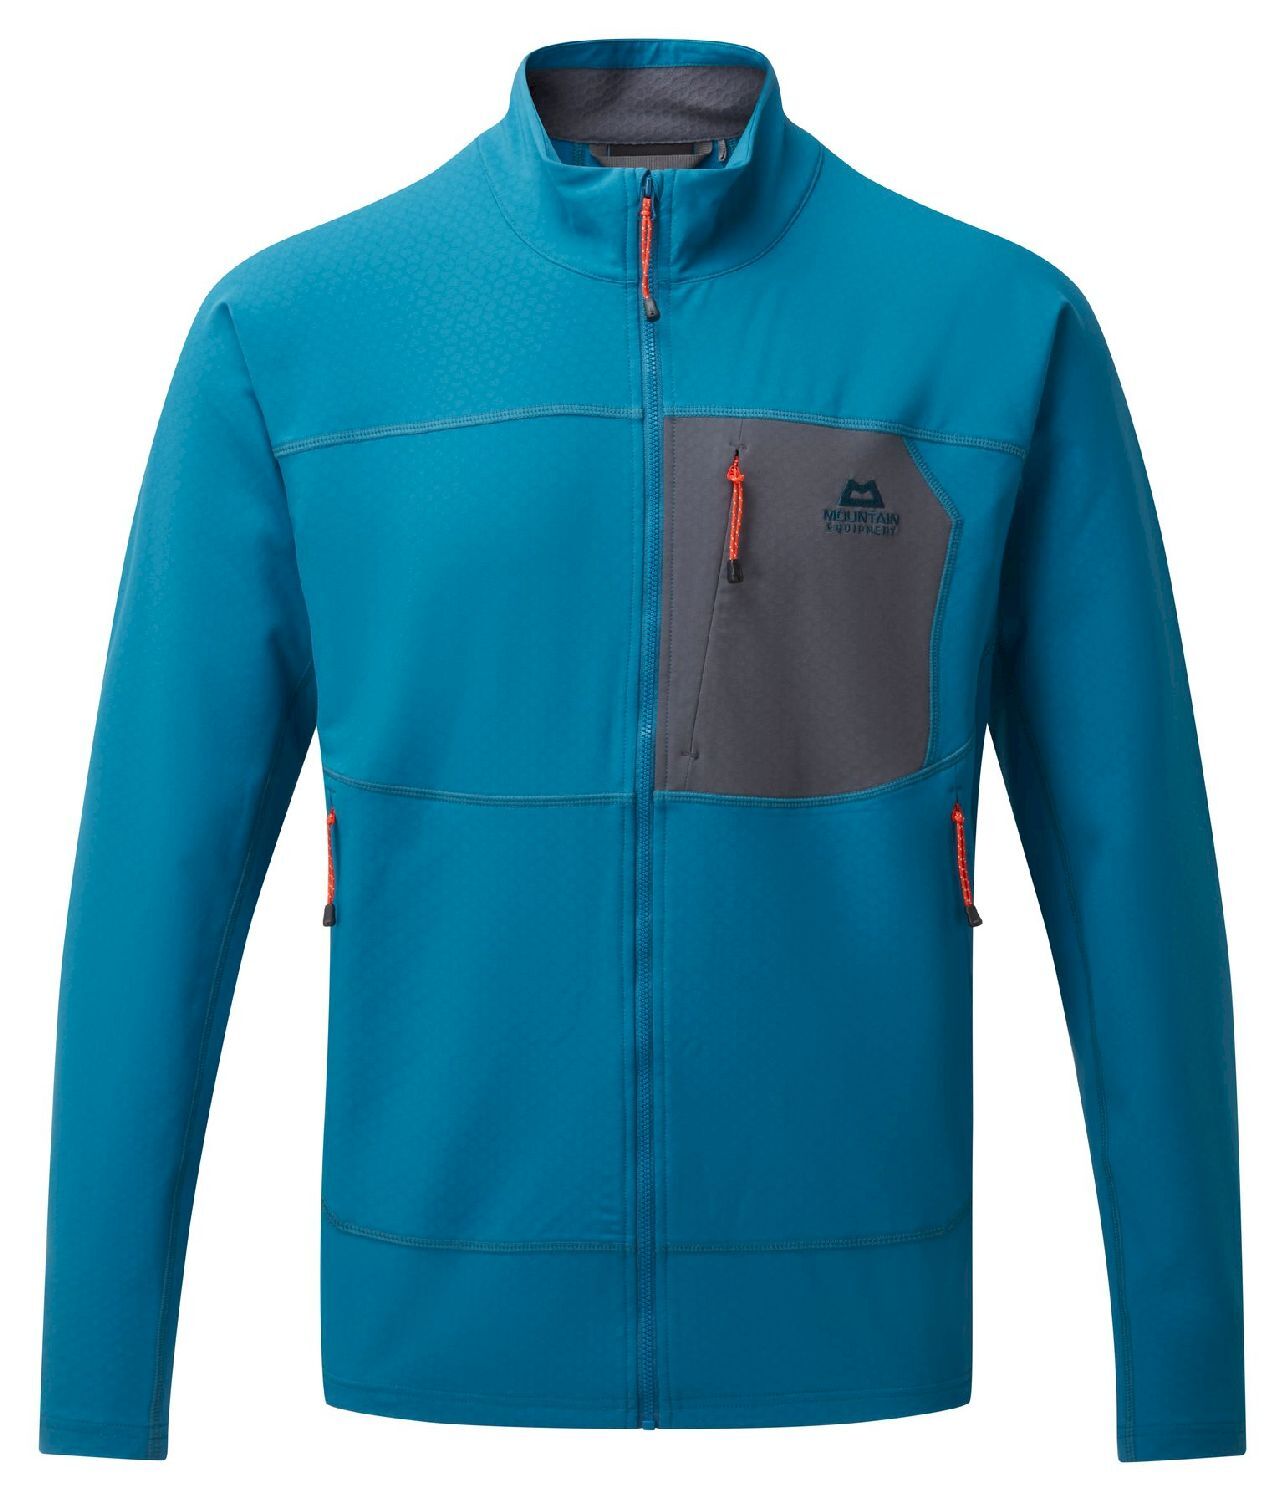 Mountain Equipment Arrow Jacket - Softshell jacket - Men's